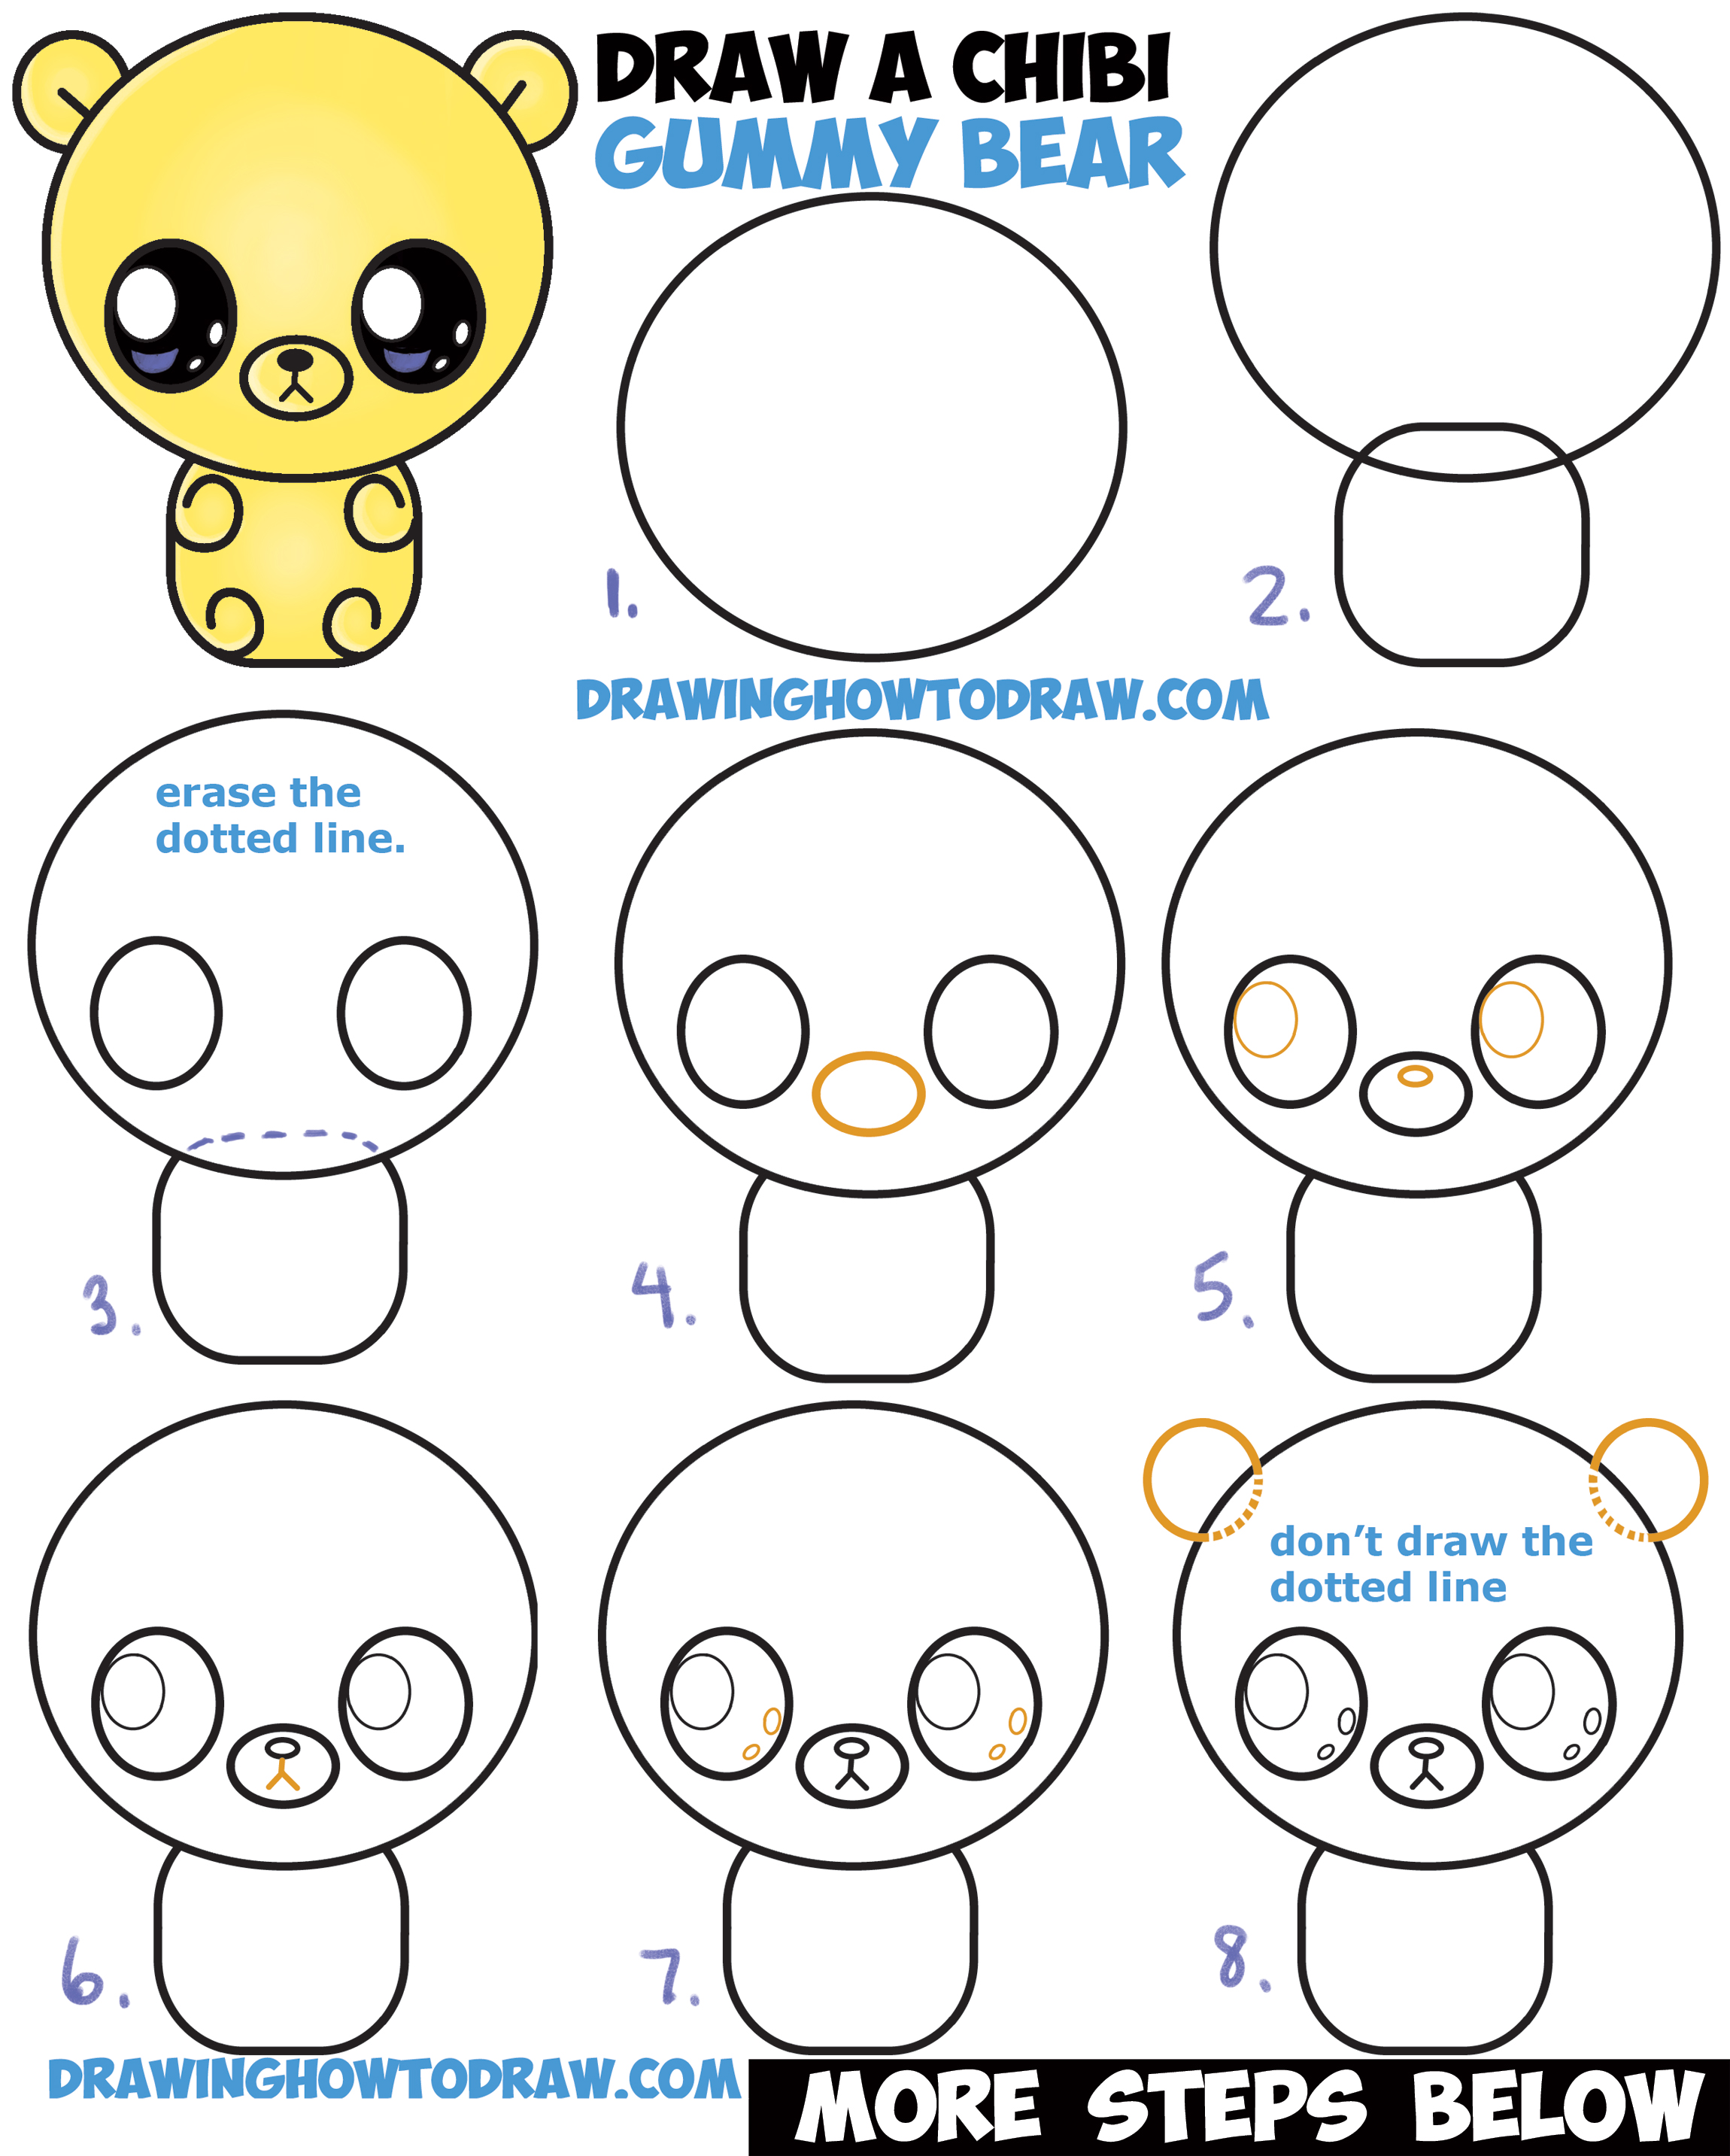 How to Draw a Cute Chibi / Kawaii / Cartoon Gummy Bear Easy Step by